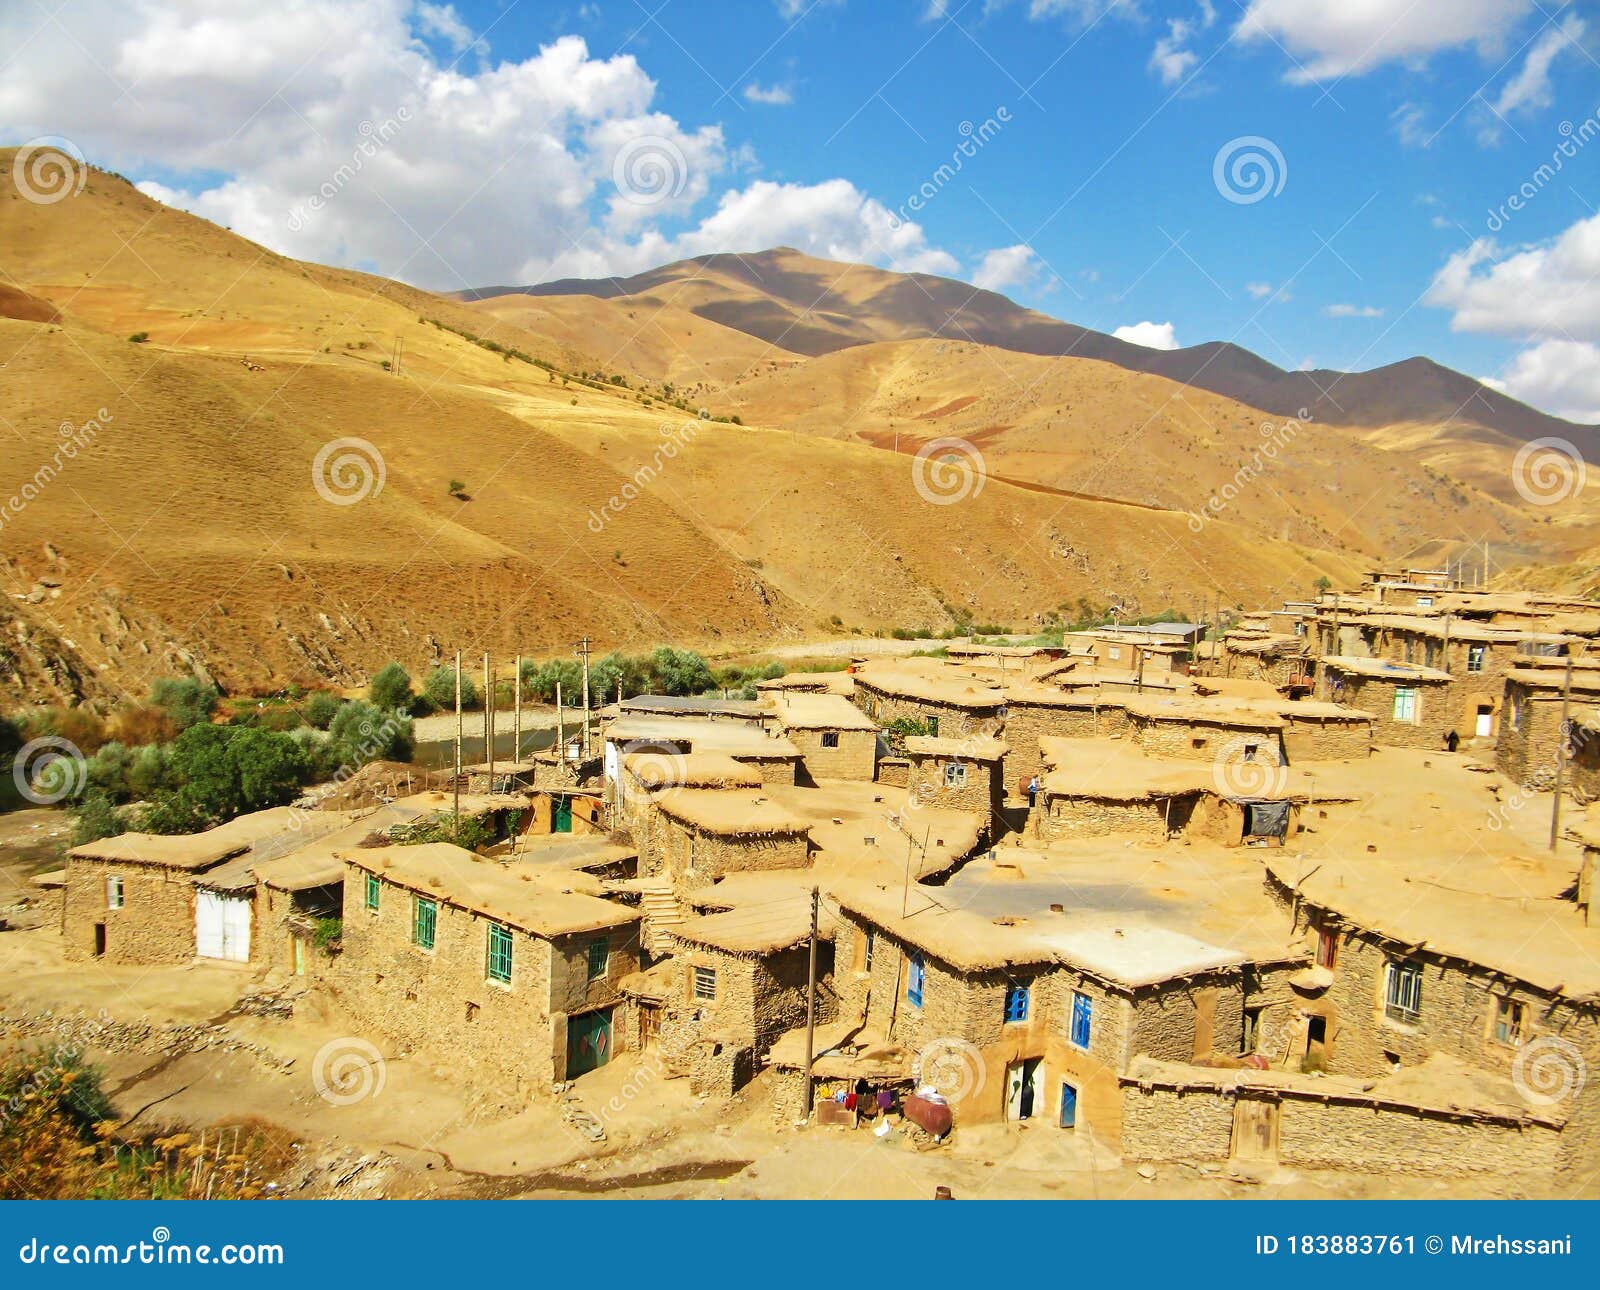 houses in a kurdish village in kurdistan province of iran